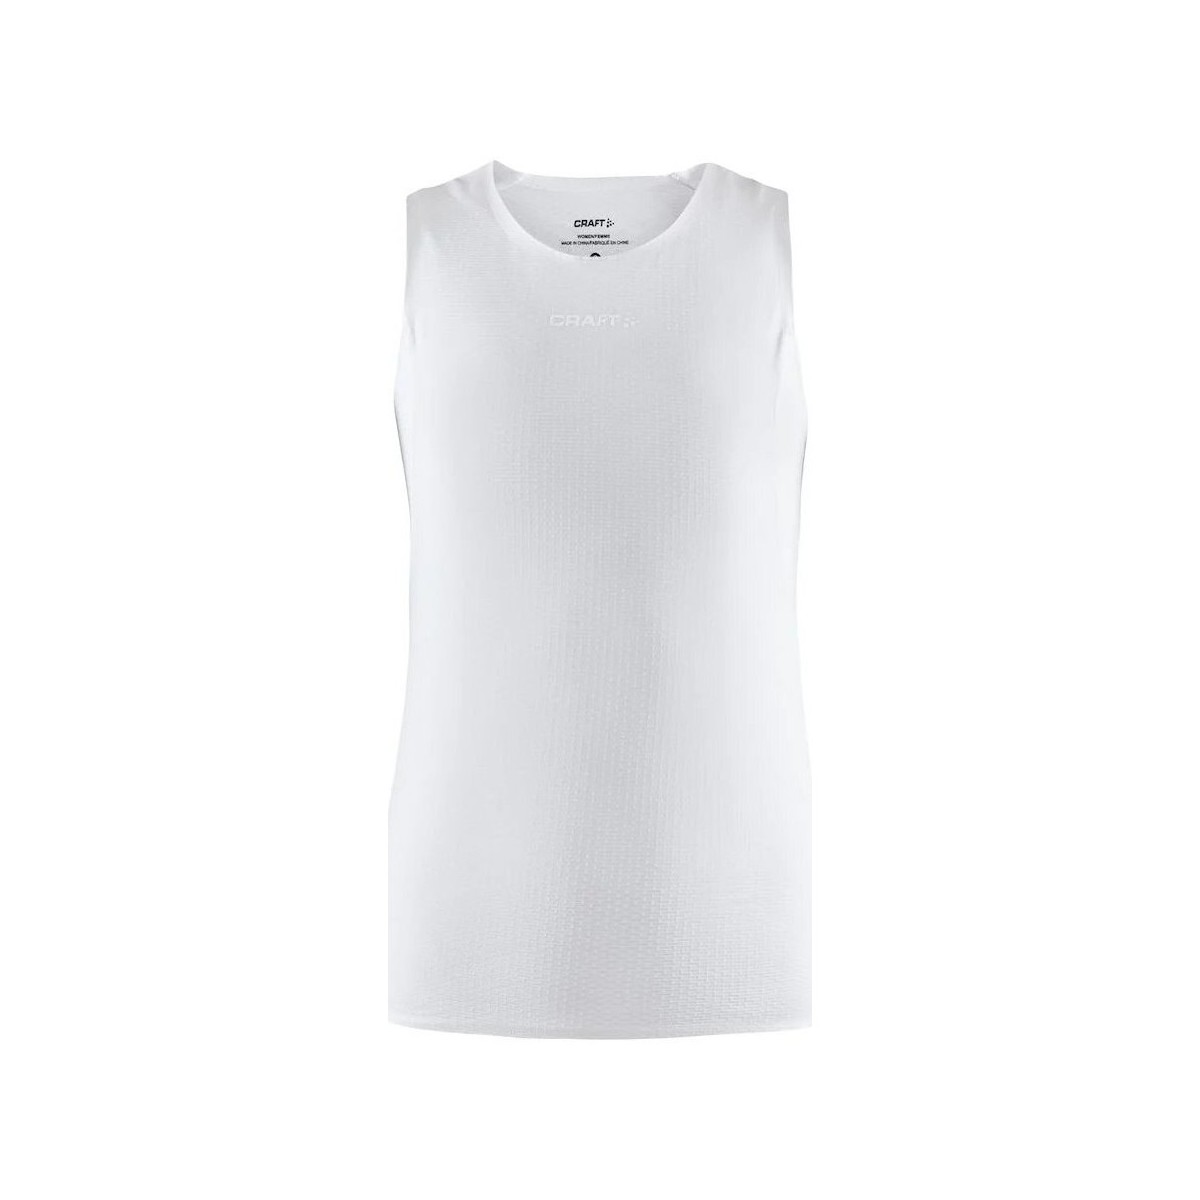 Vêtements Femme T-shirts manches longues Craft UB959 Blanc